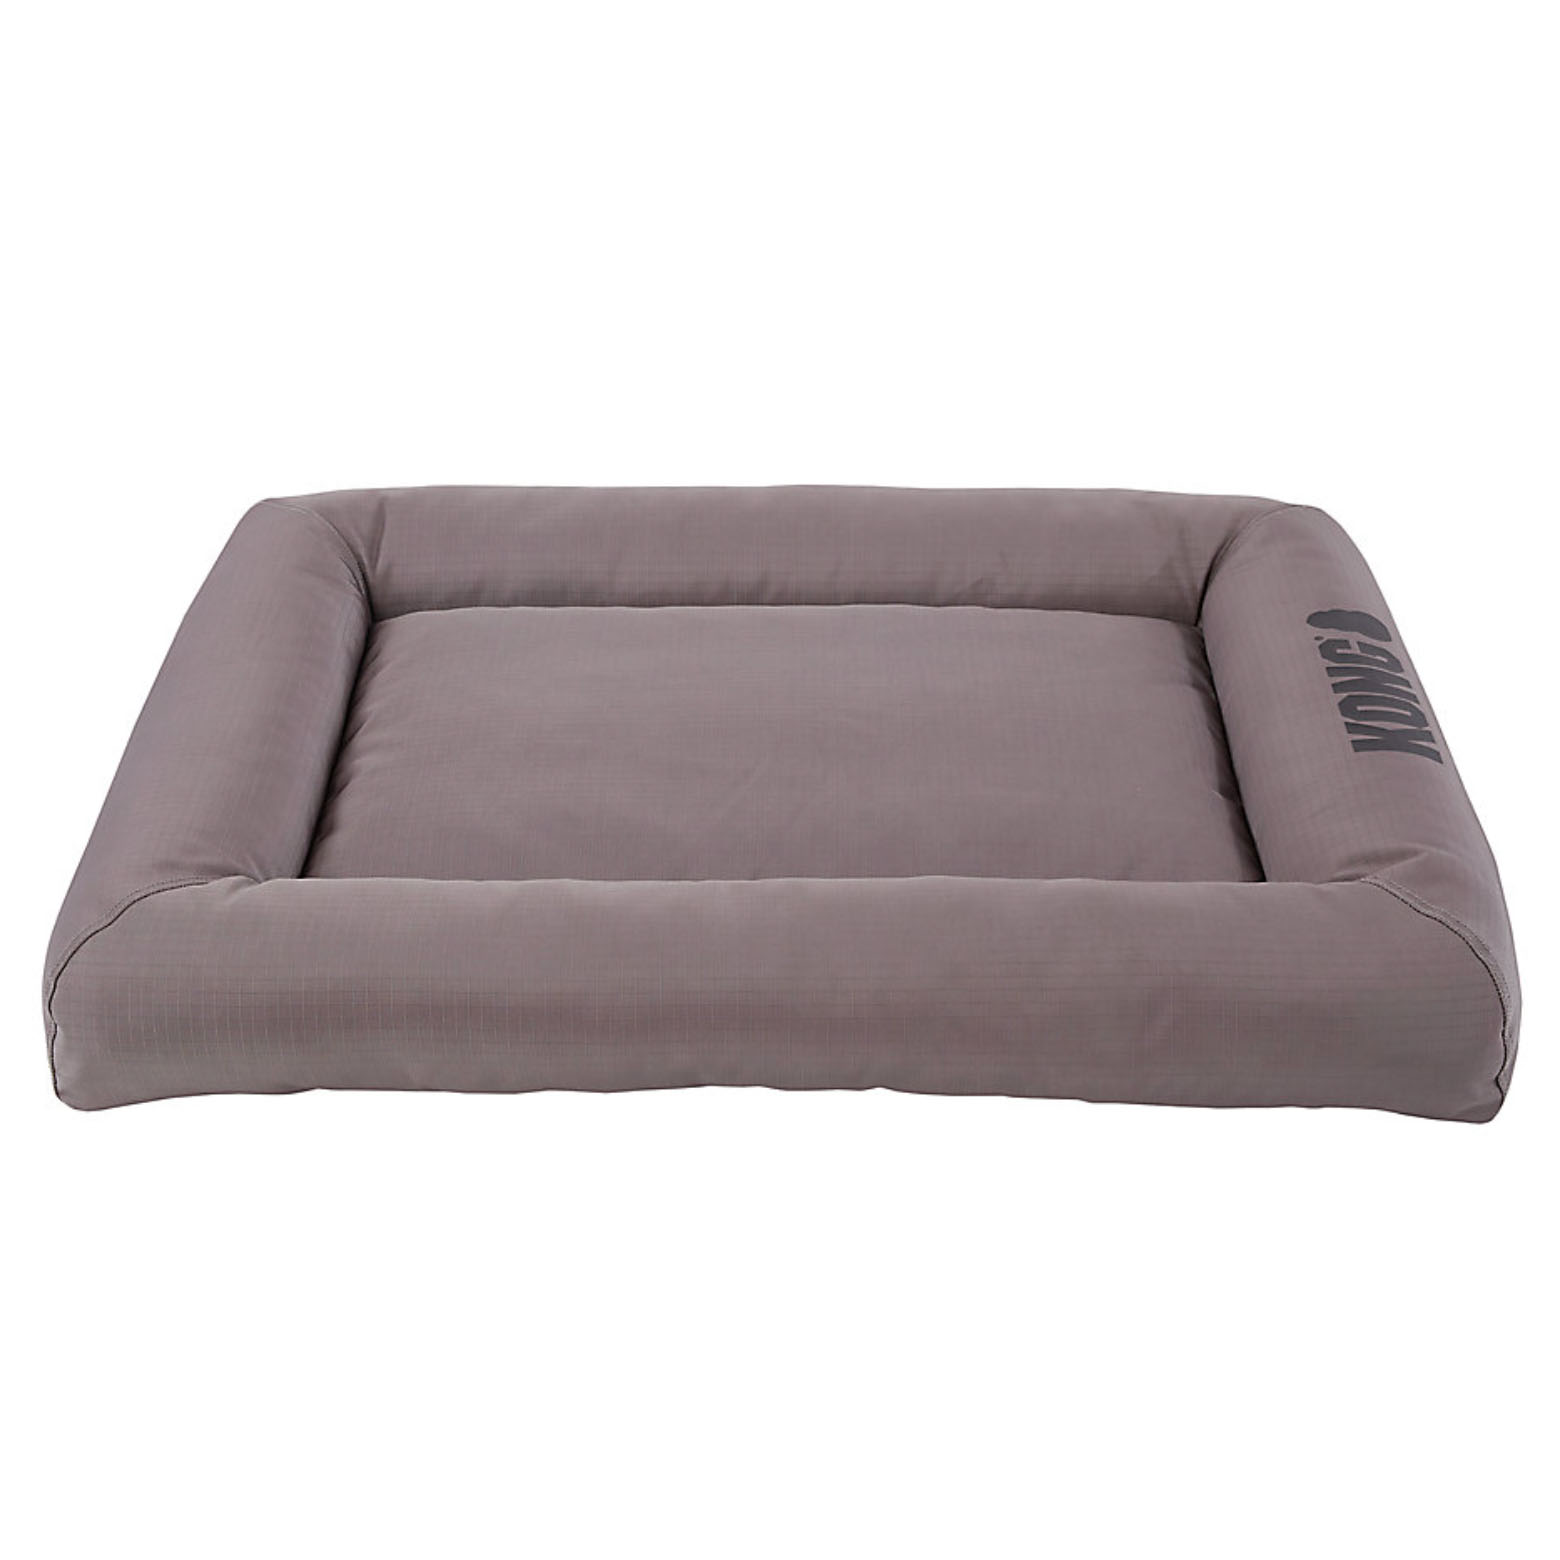 Grey flat dog bed